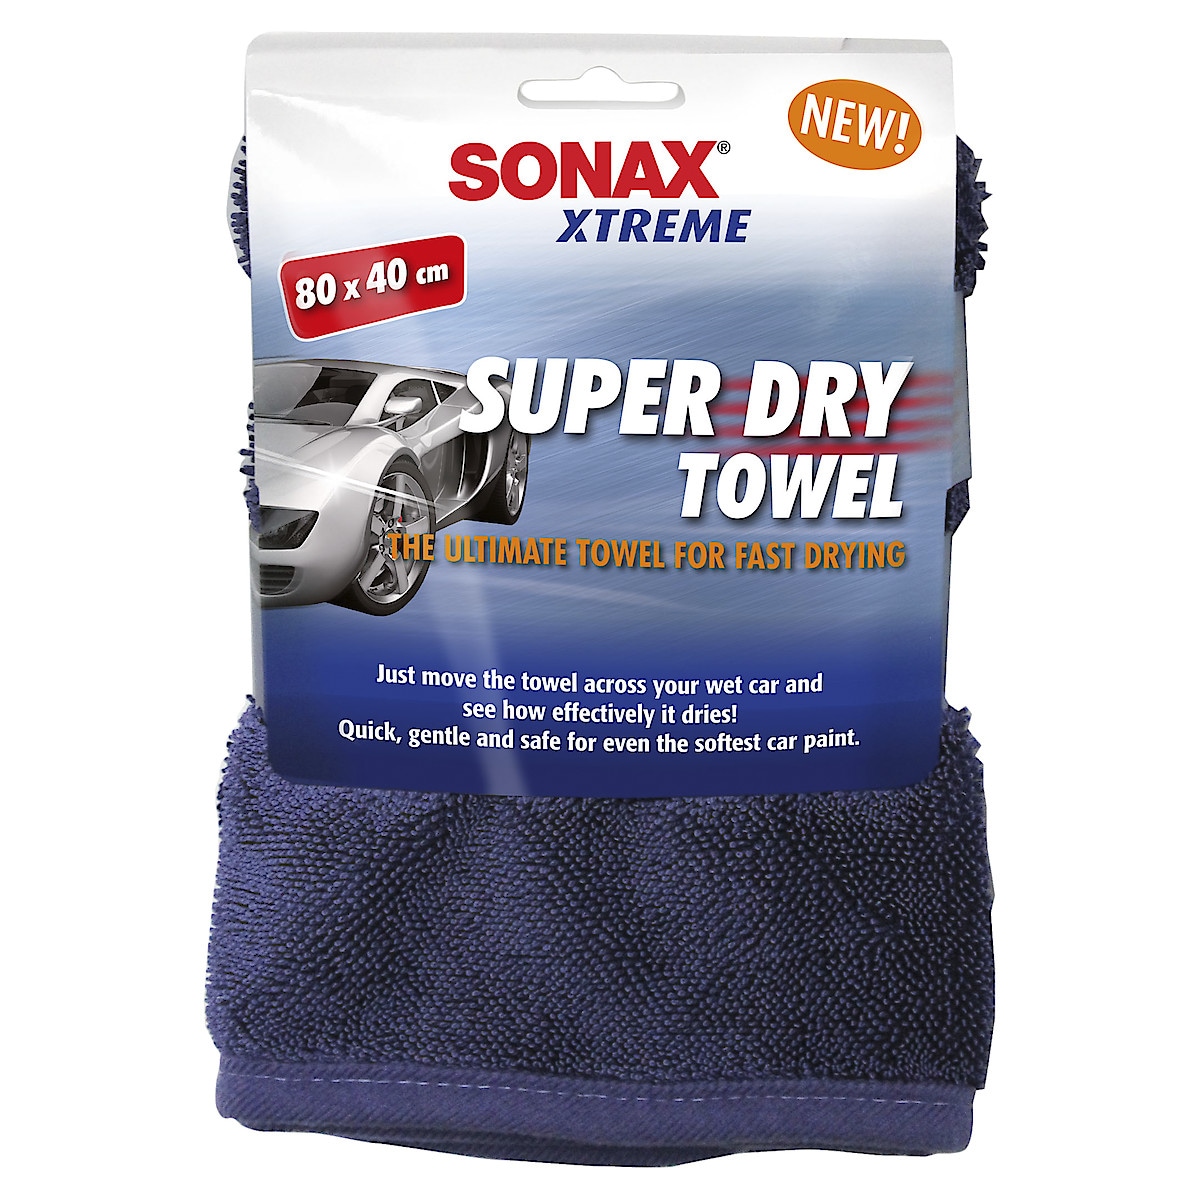 Sonax Xtreme Super Dry Towel